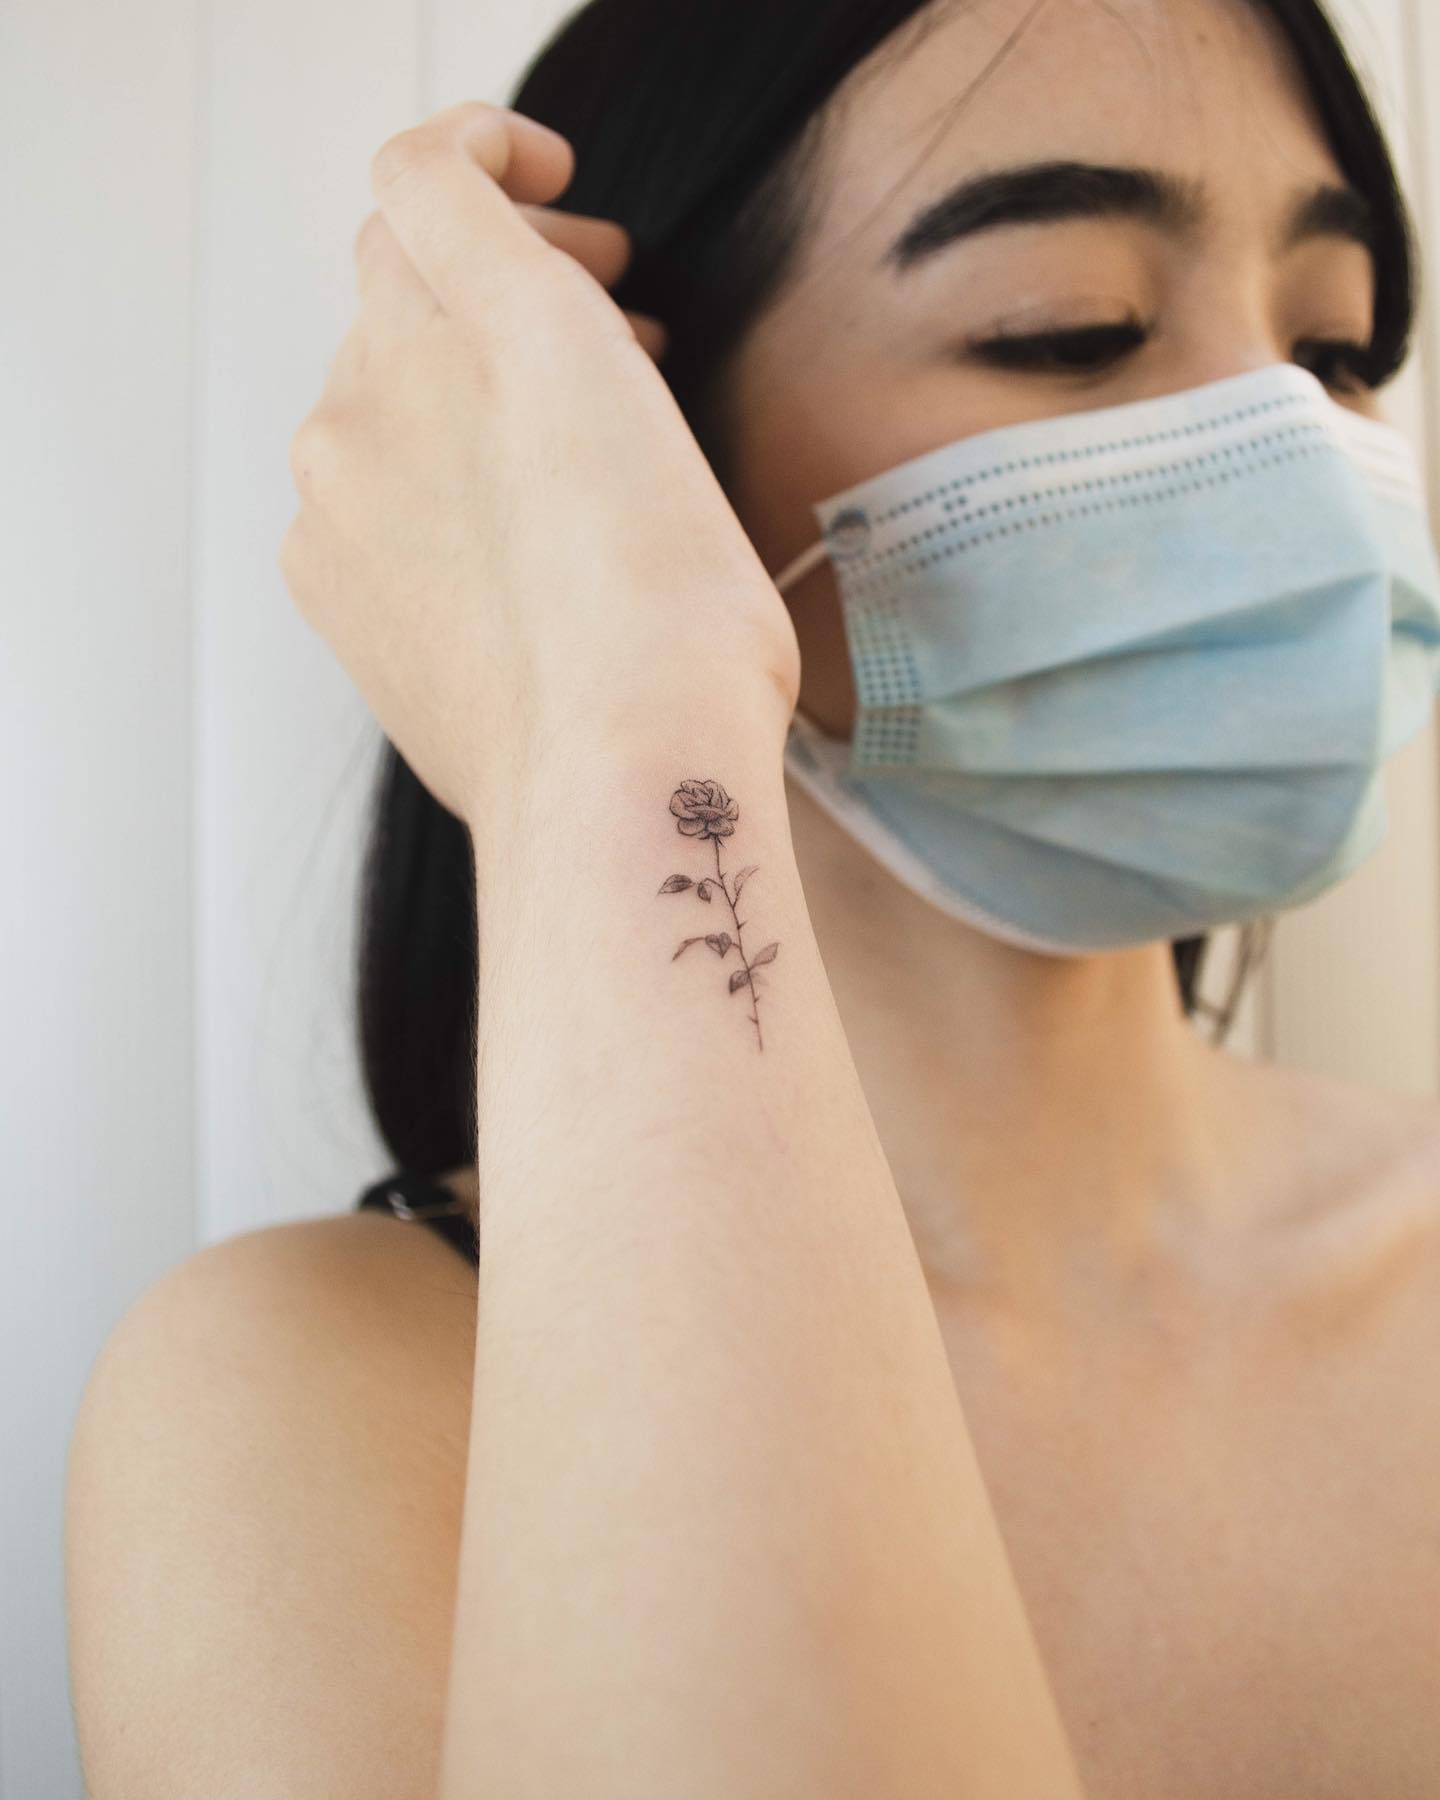 Delicate Single Rose Tattoo on Forearm